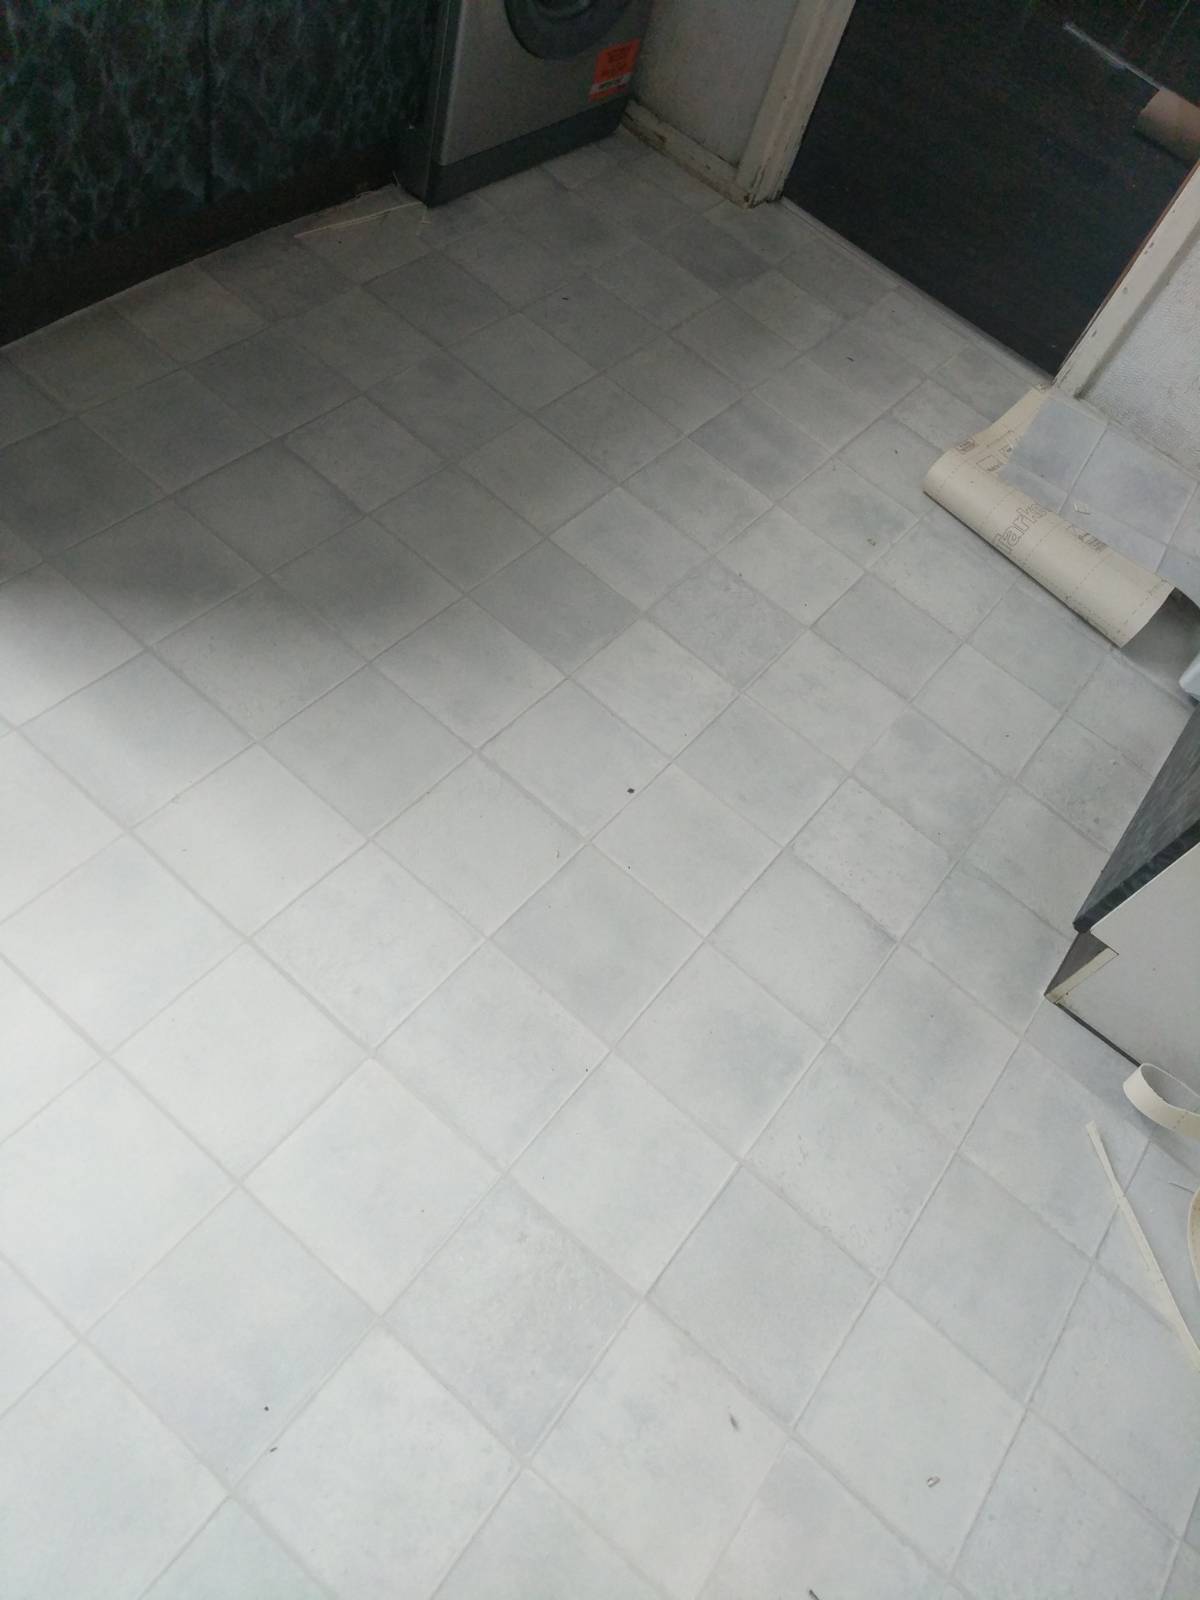 light vinyl flooring with tile design in kitchen